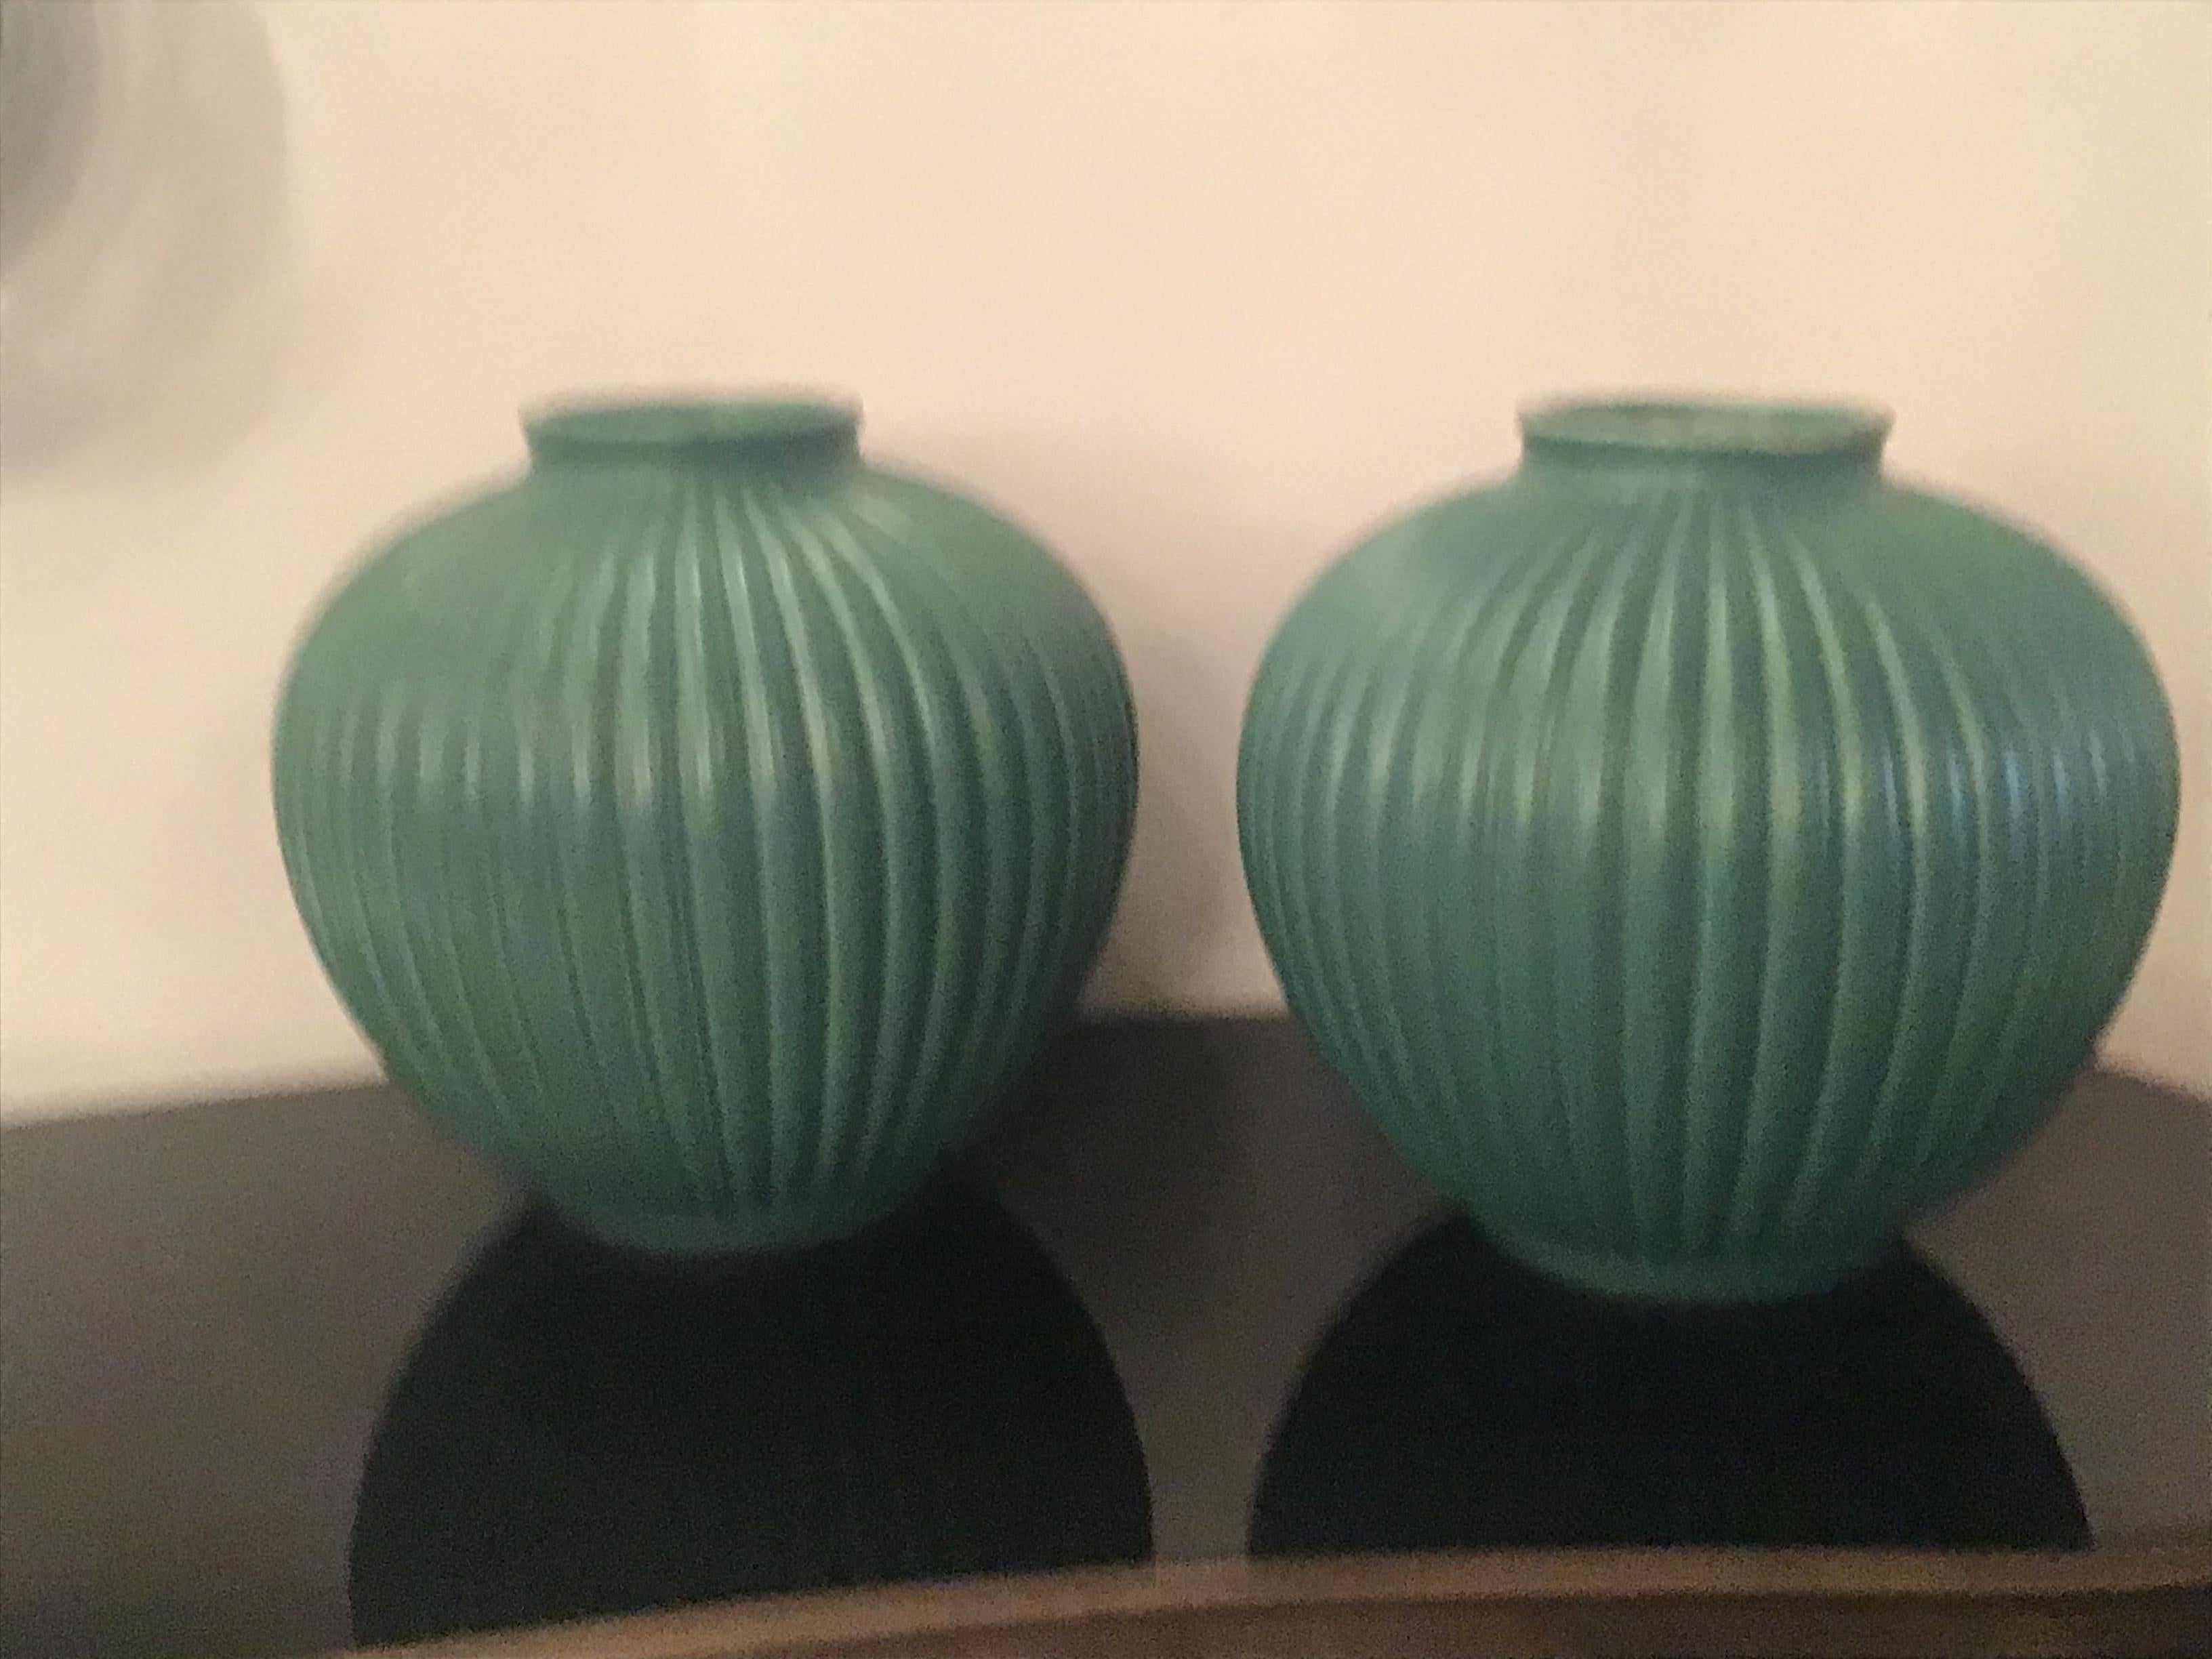 Richard Ginori Giovanni Gariboldi Pair of Vases Green Ceramic 1950 Italy For Sale 9